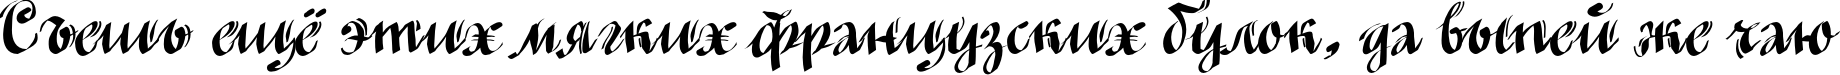 Пример написания шрифтом MinusmanC текста на русском